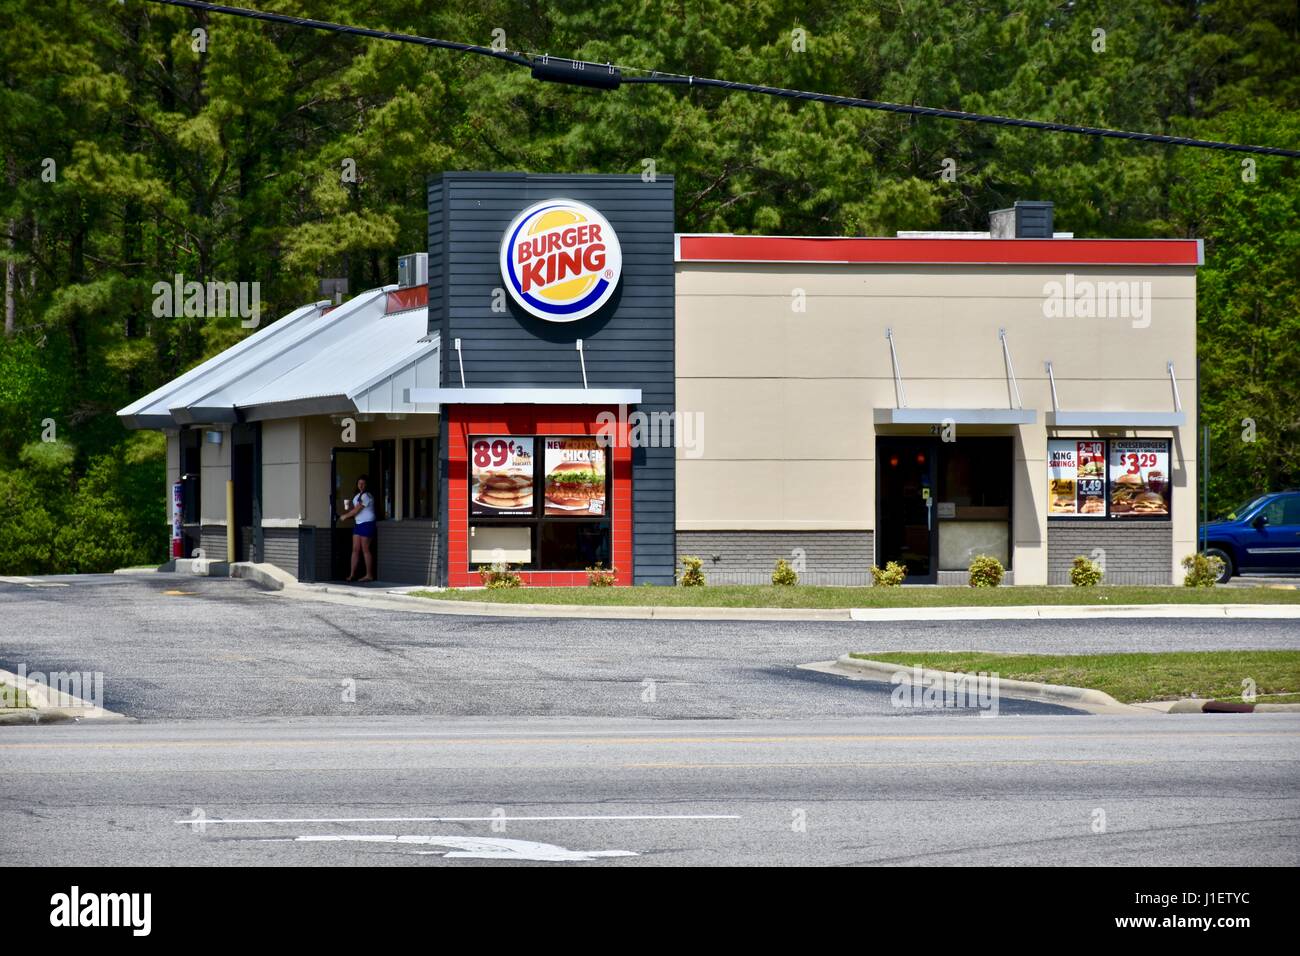 Burger King fast food restaurant Stock Photo